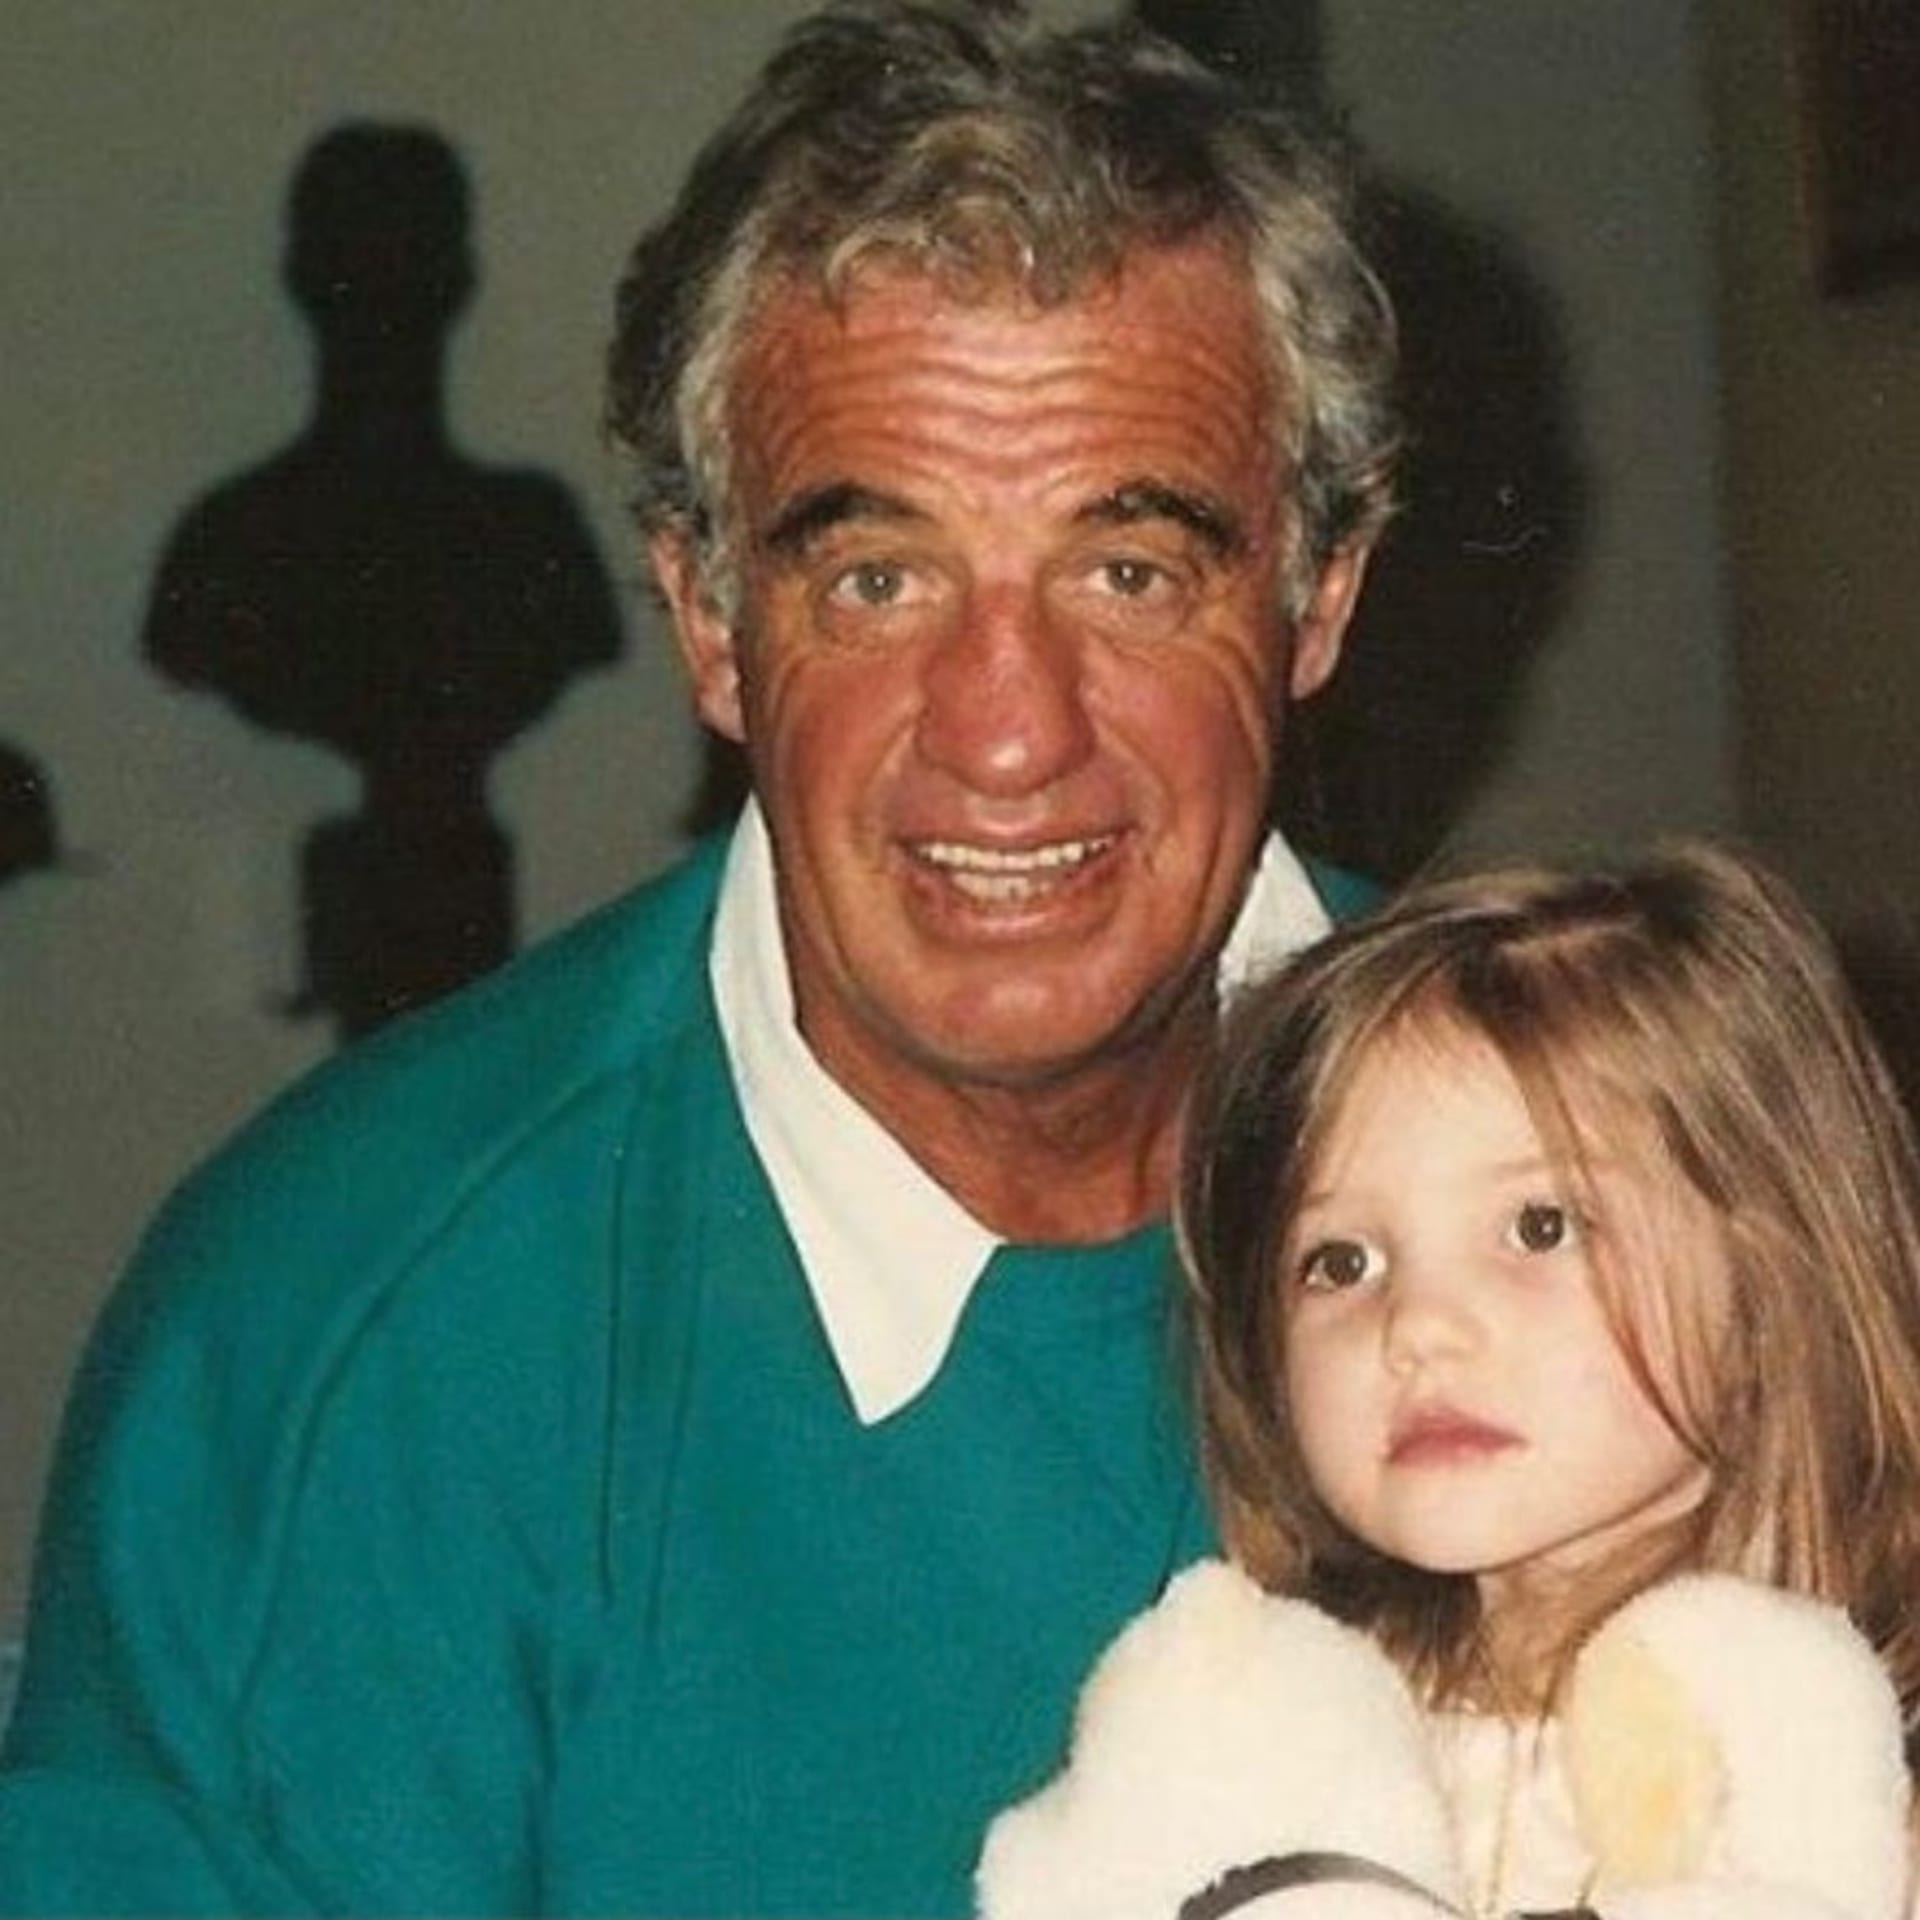 Jean-Paul Belmondo se svou vnoučkou Annabelle